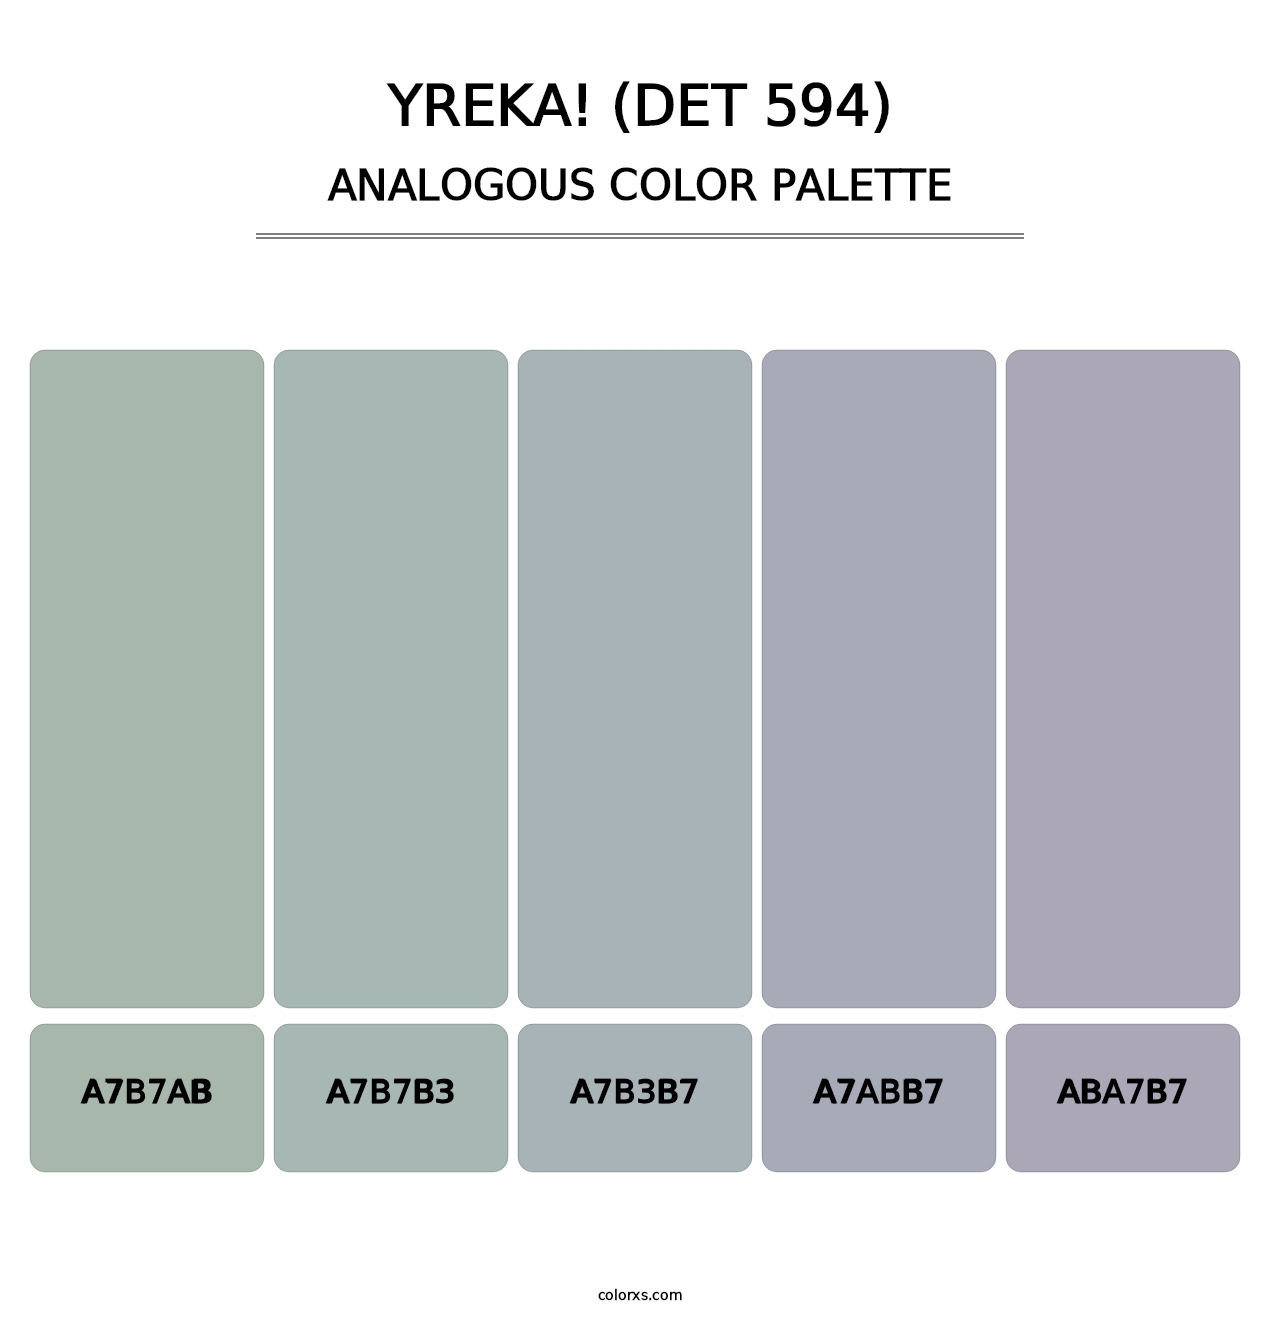 Yreka! (DET 594) - Analogous Color Palette